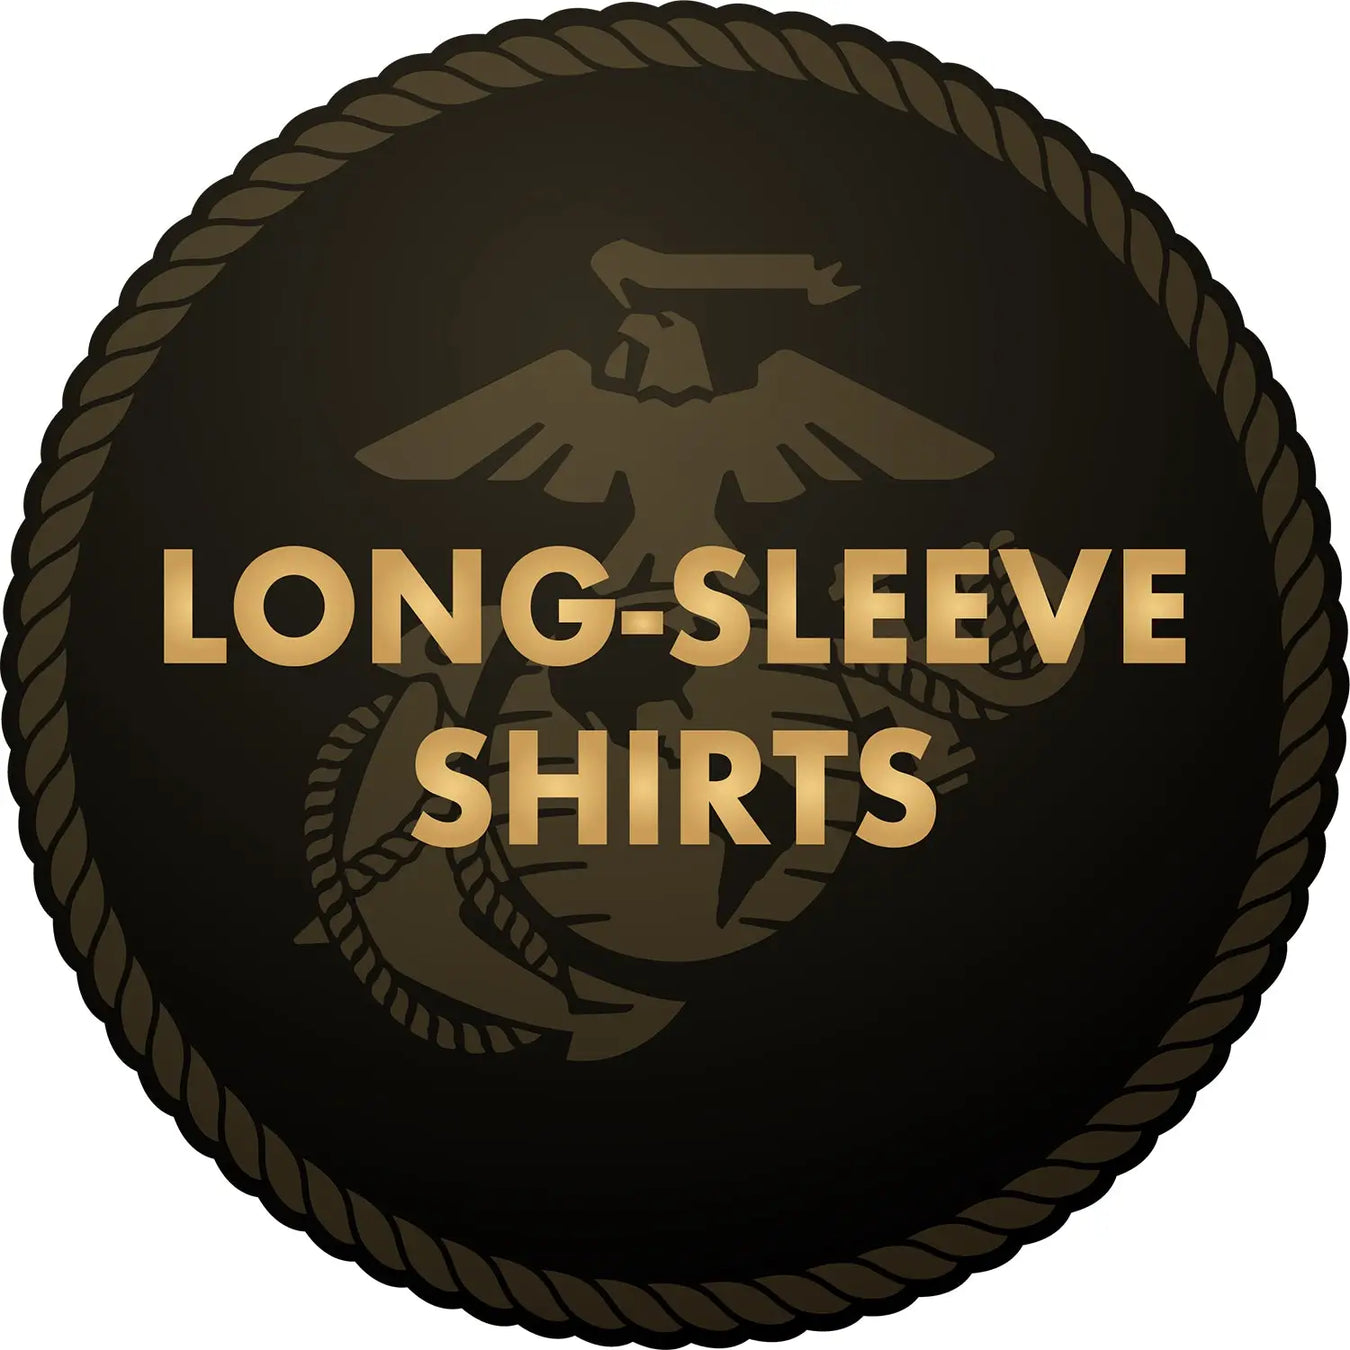 U.S. Marine Corps Long-Sleeve Shirts